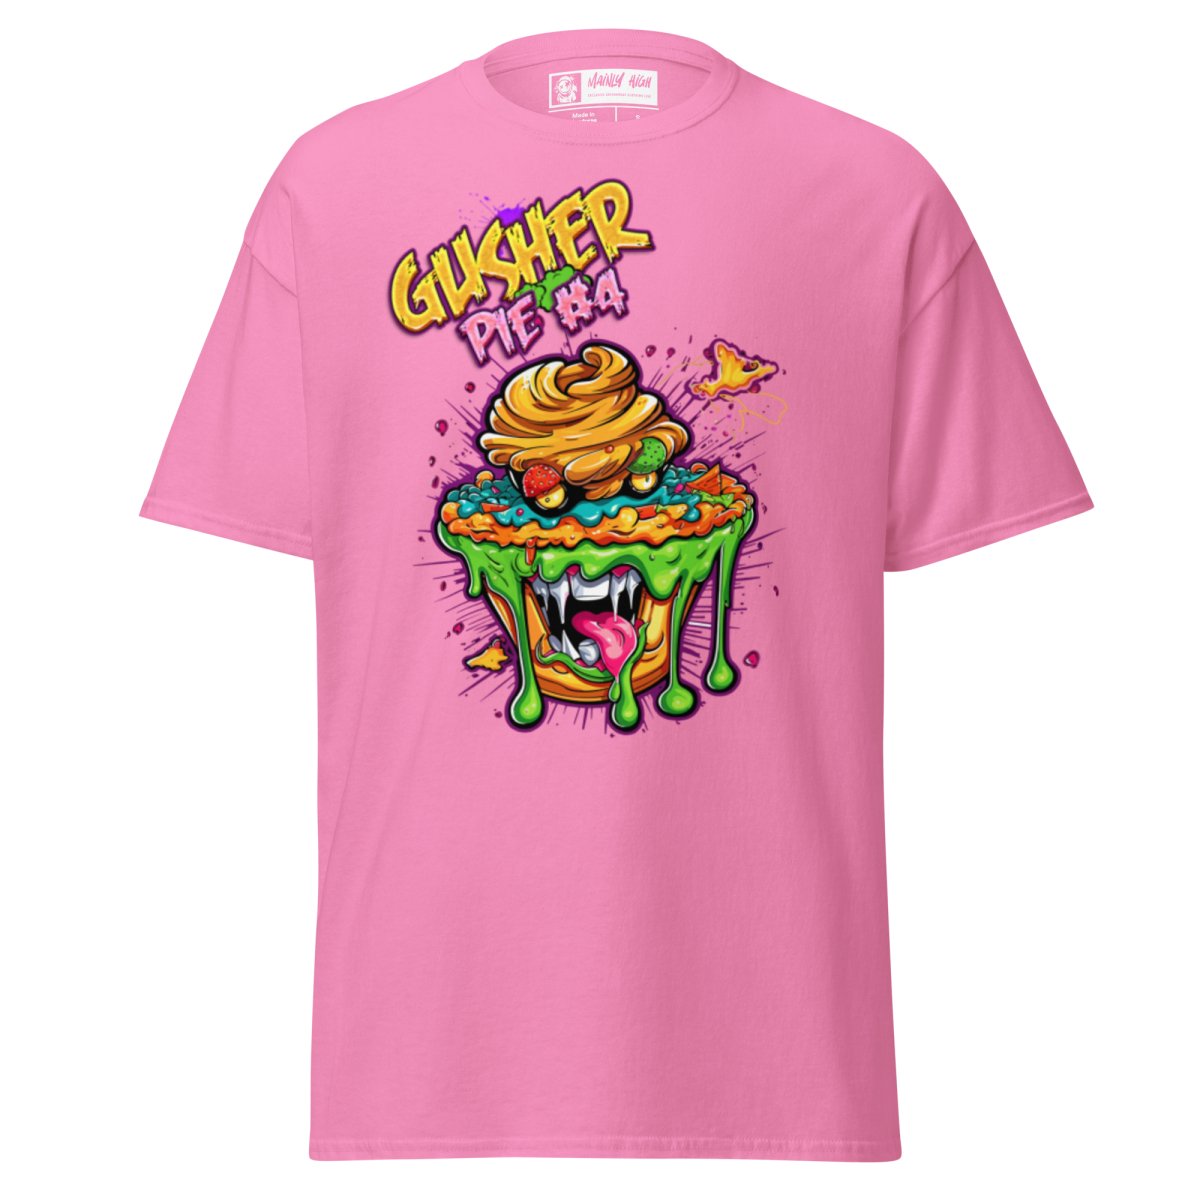 Gusher Pie #4 T-Shirt - Mainly High